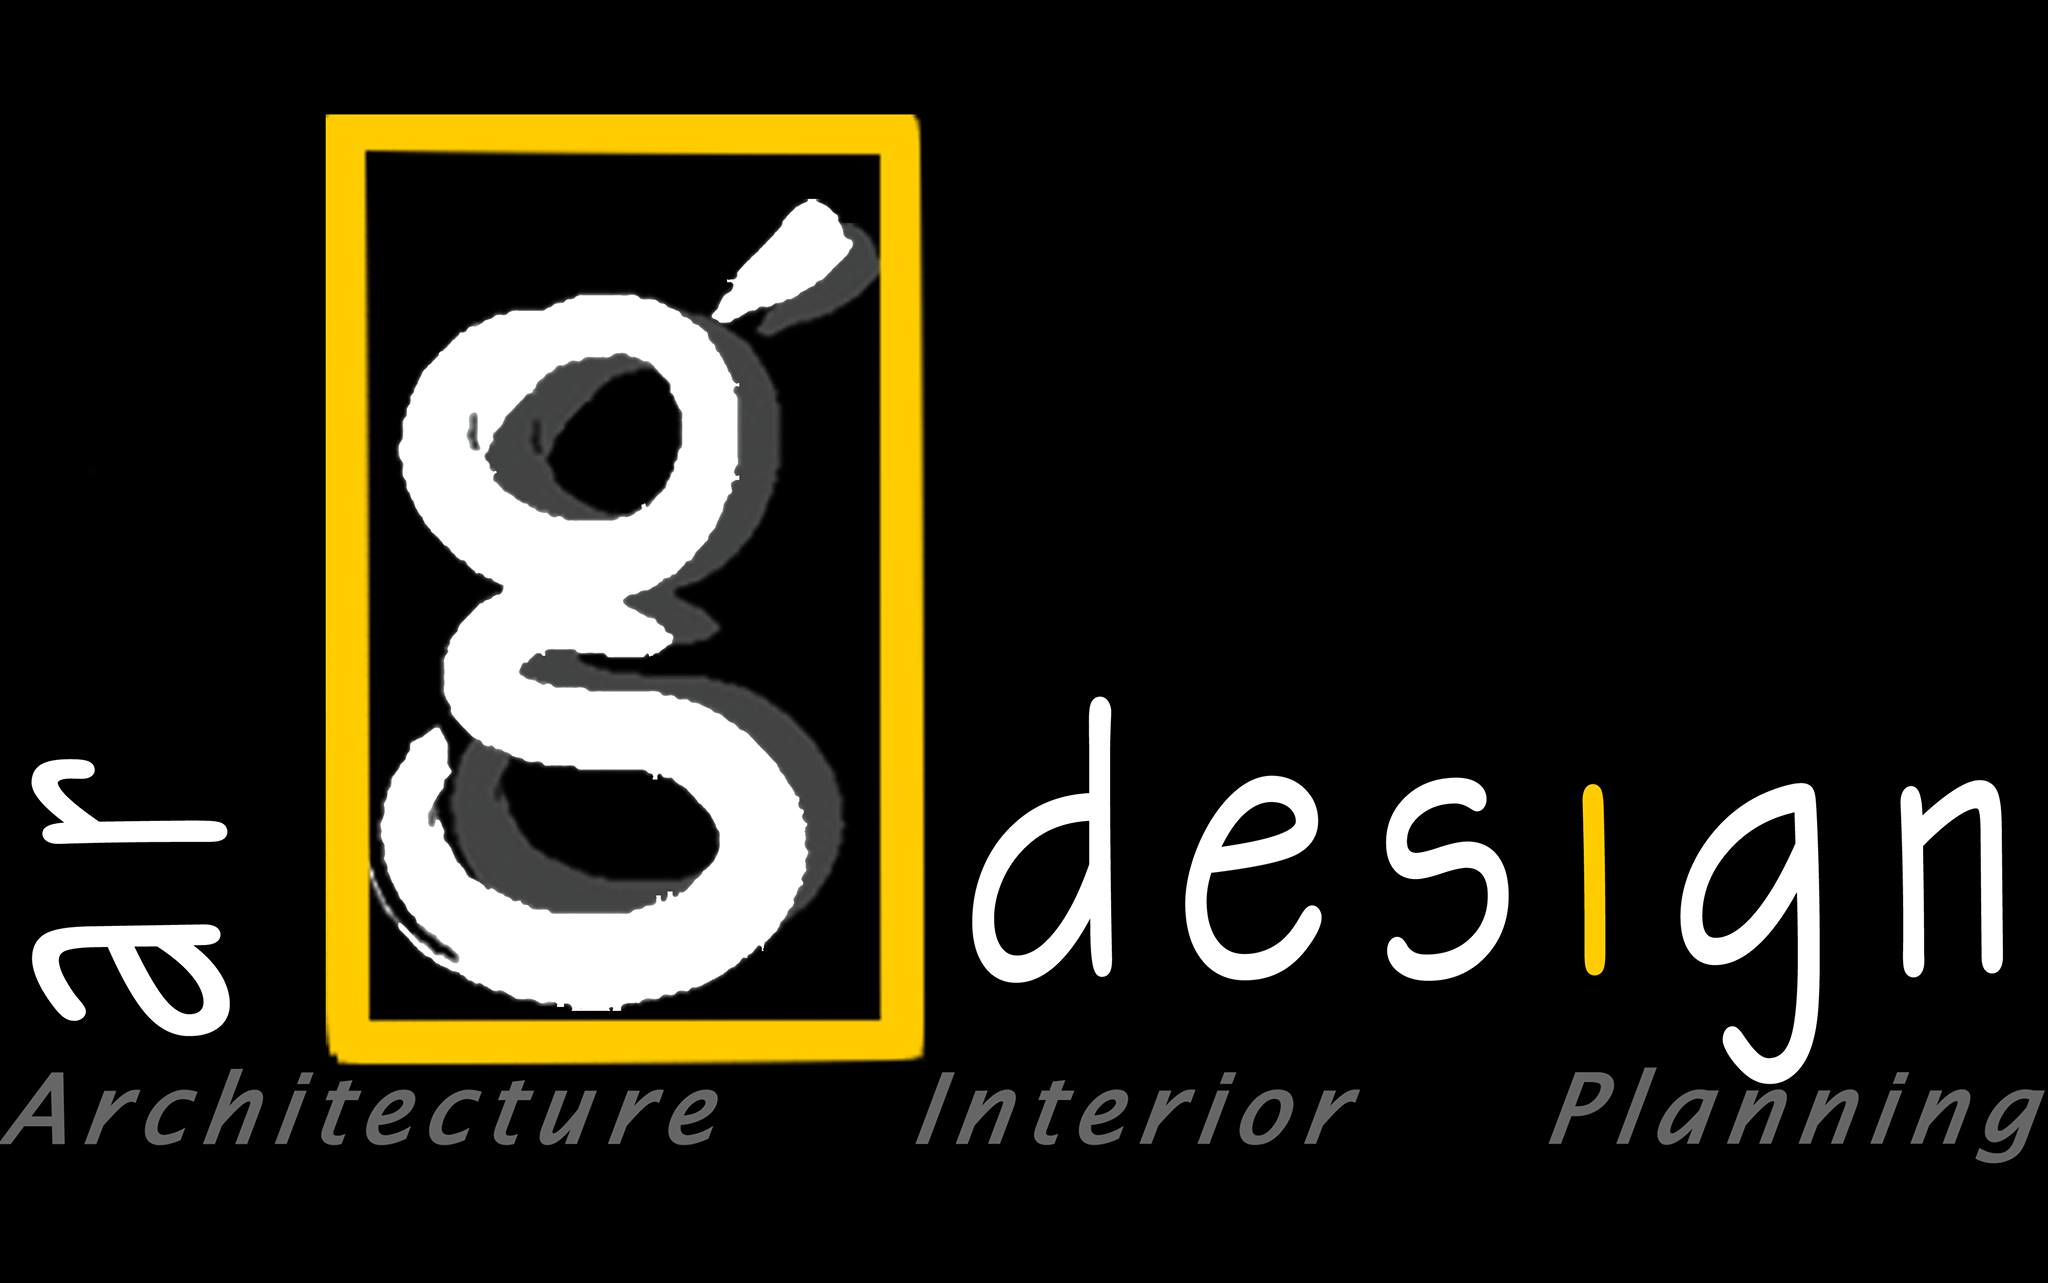 AR G DESIGN|IT Services|Professional Services